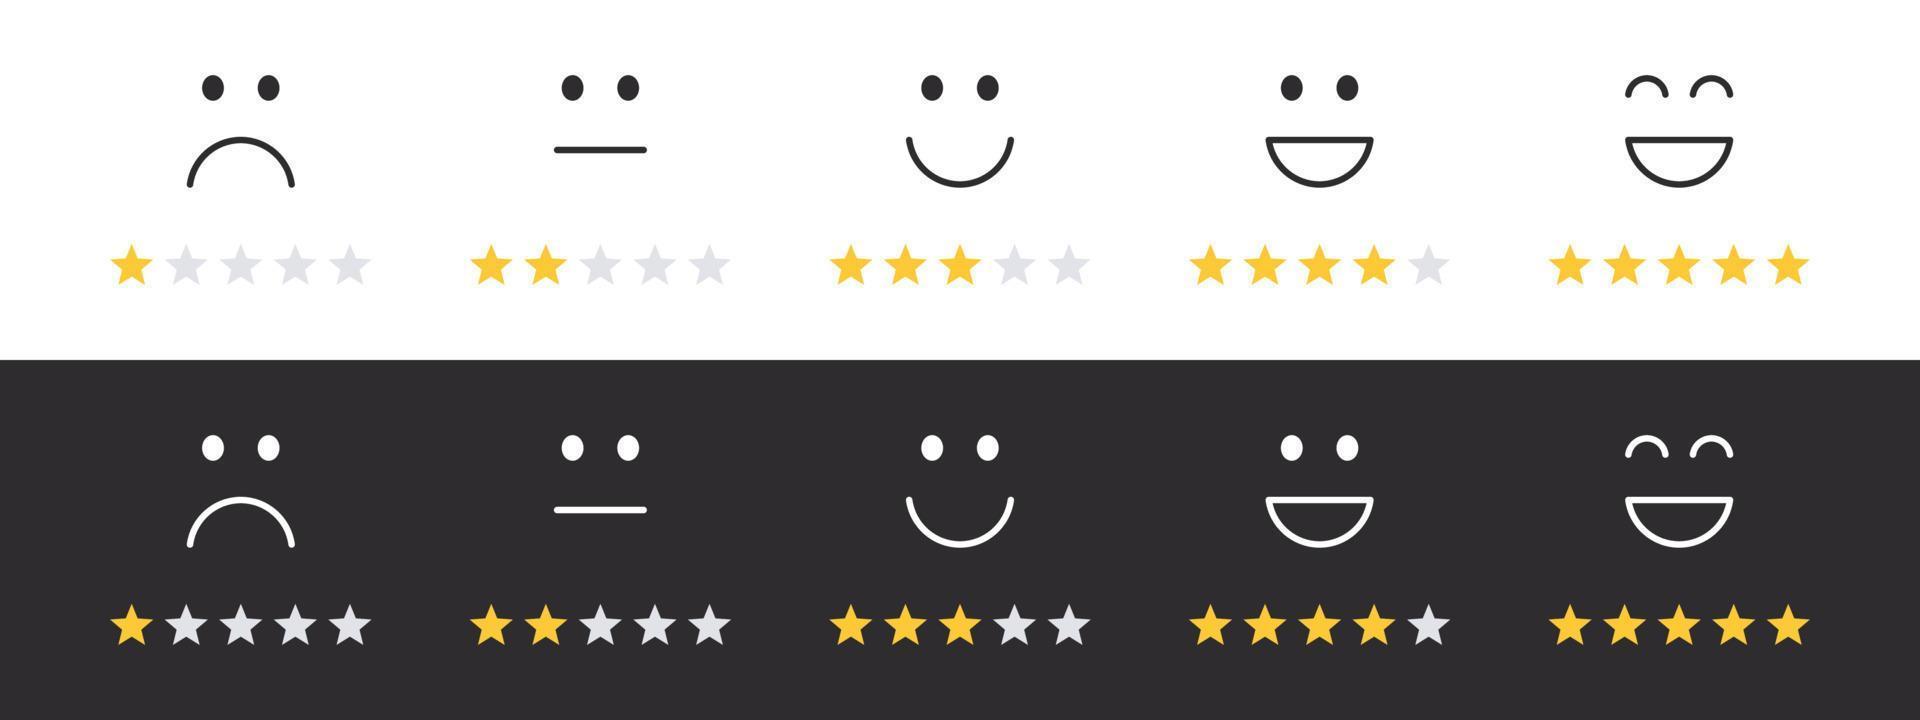 Feedback stars. Satisfaction and customer service. Customer review. Vector illustration